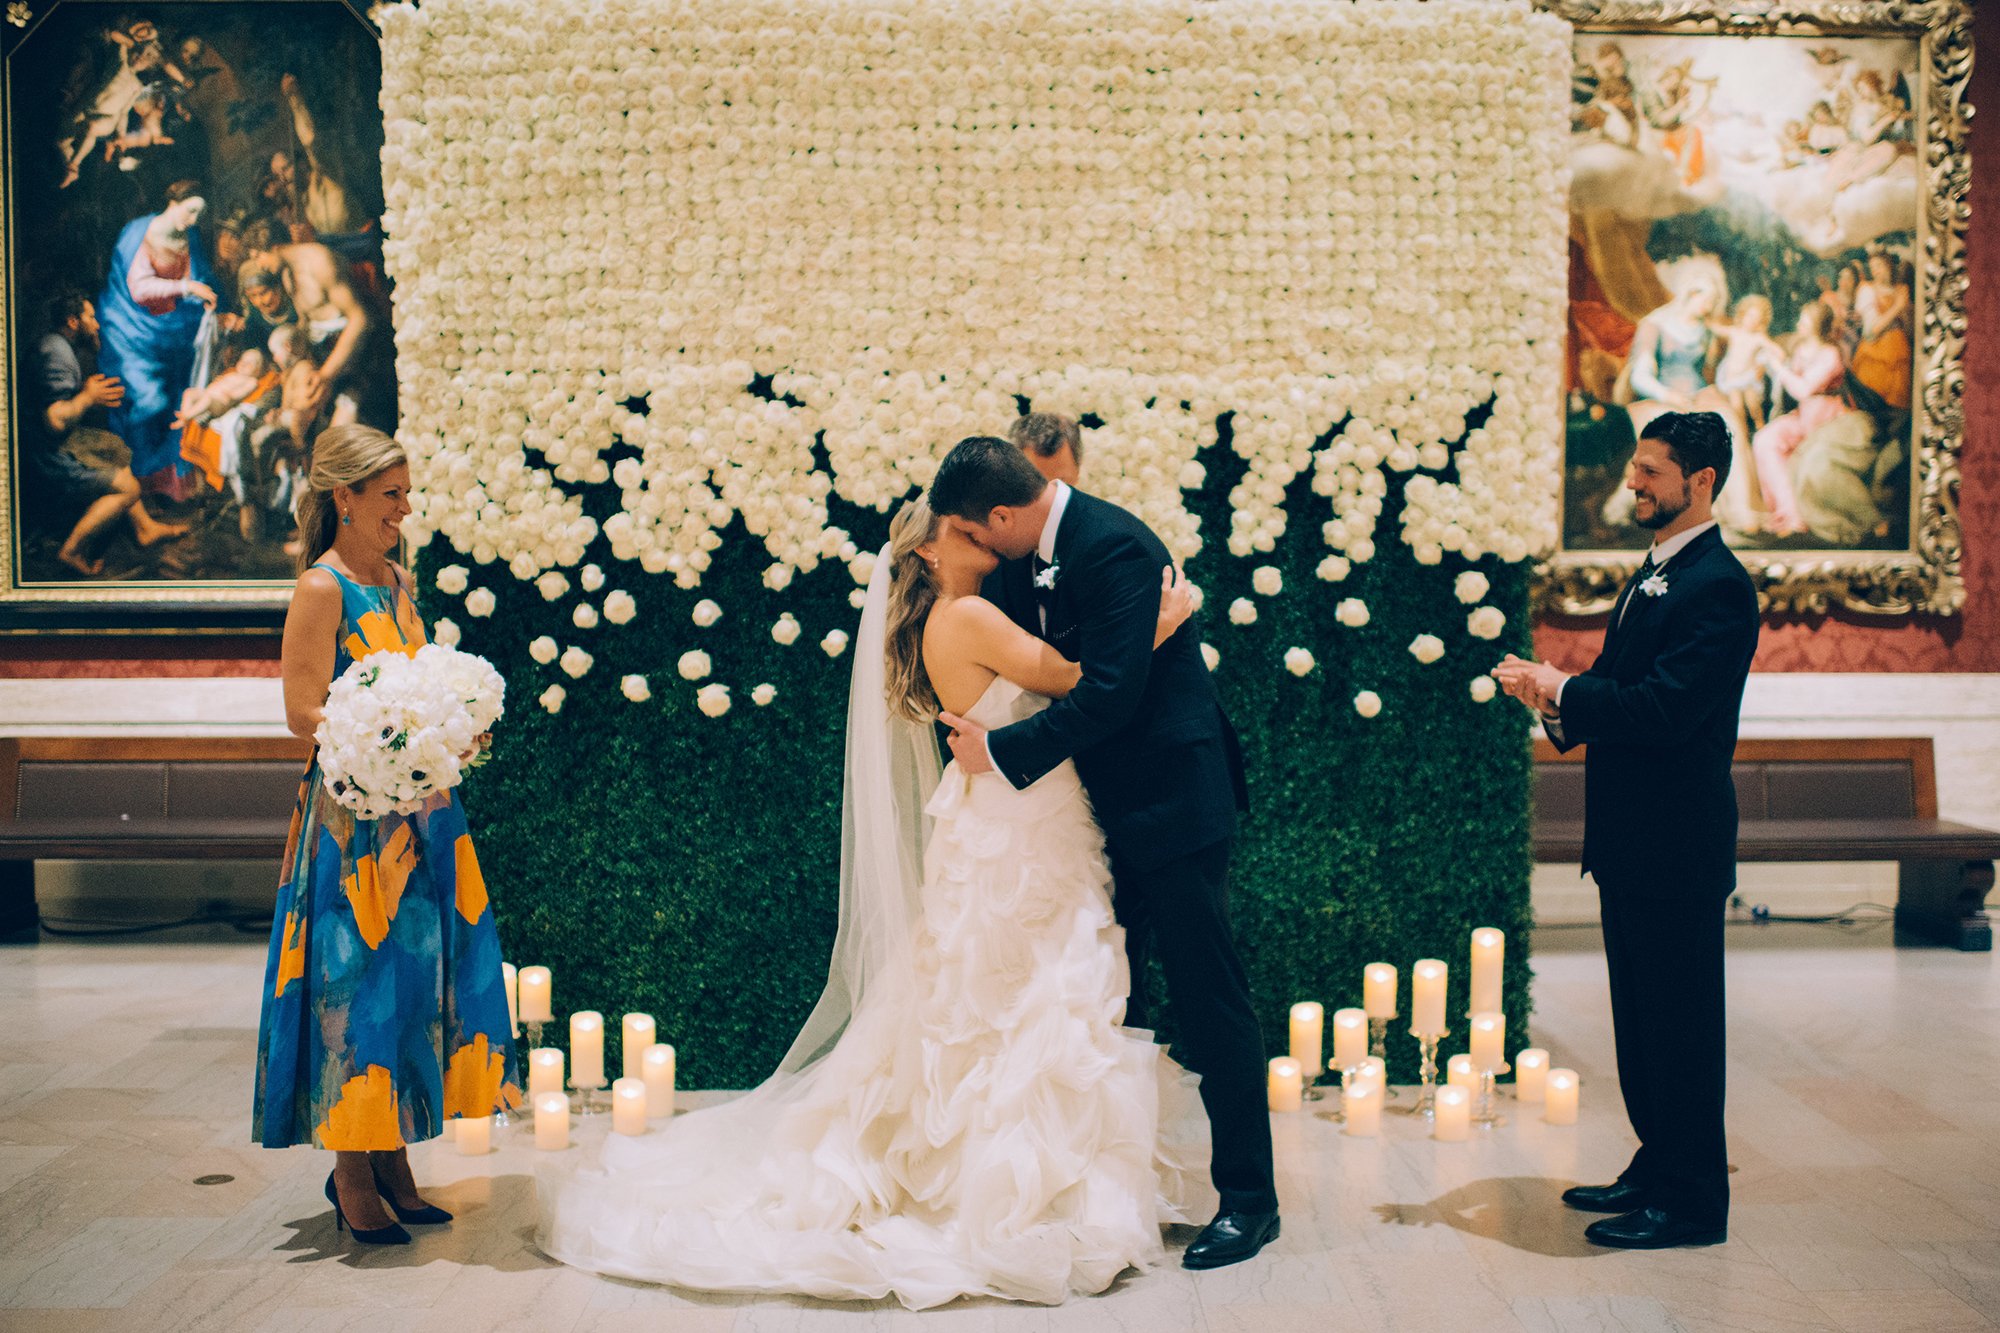 000A_MFA+Wedding+Couple+Kiss+Flower+Wall_AE+Events.jpeg.jpg.jpg